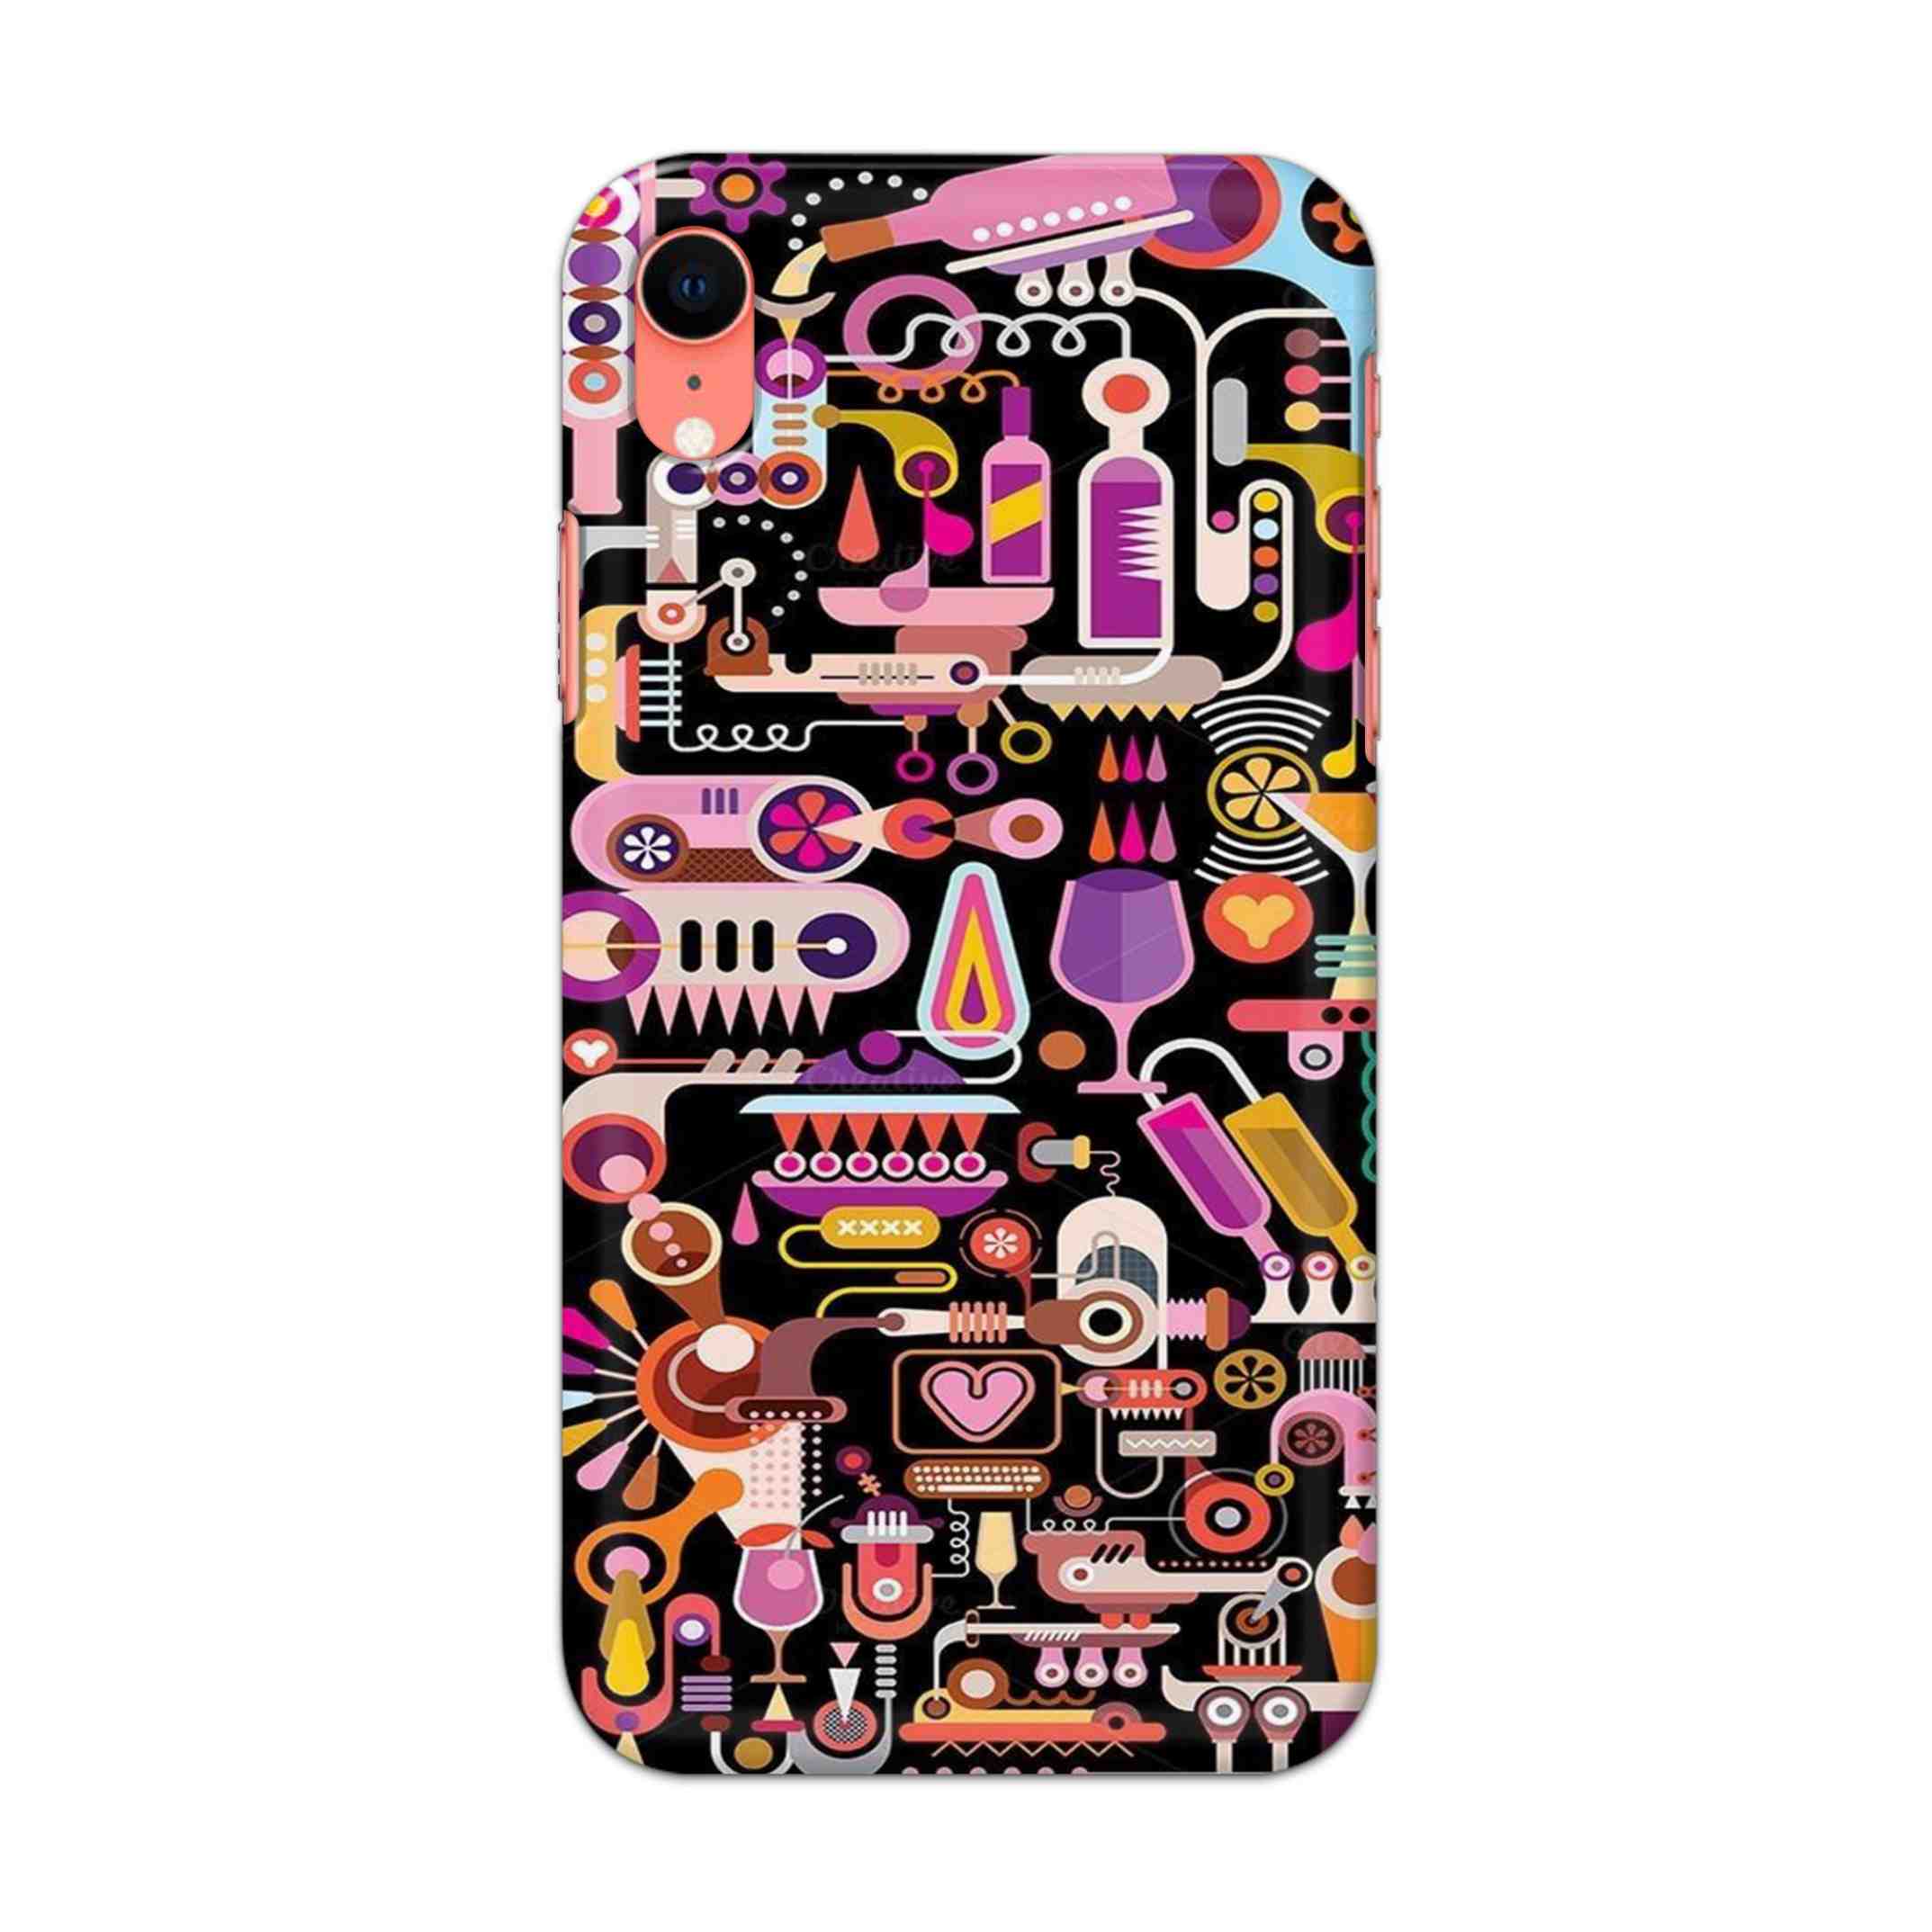 Buy Art Hard Back Mobile Phone Case/Cover For iPhone XR Online